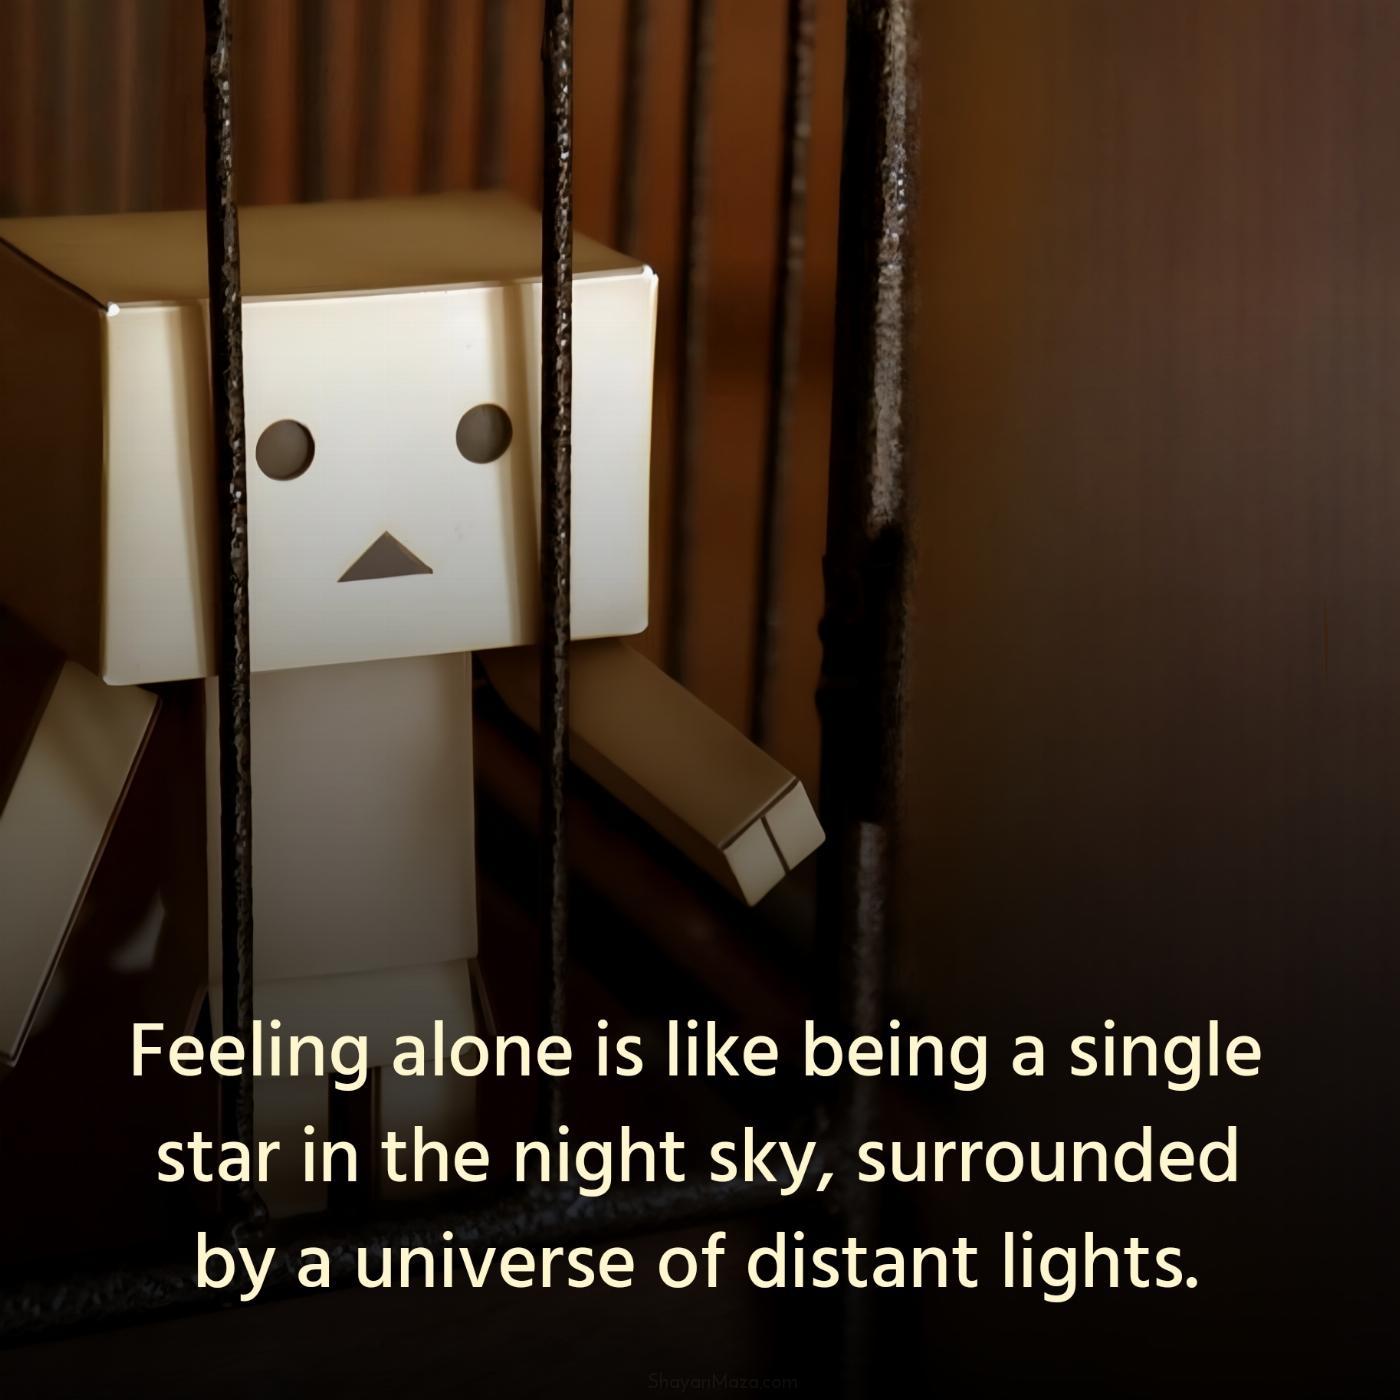 Feeling alone is like being a single star in the night sky